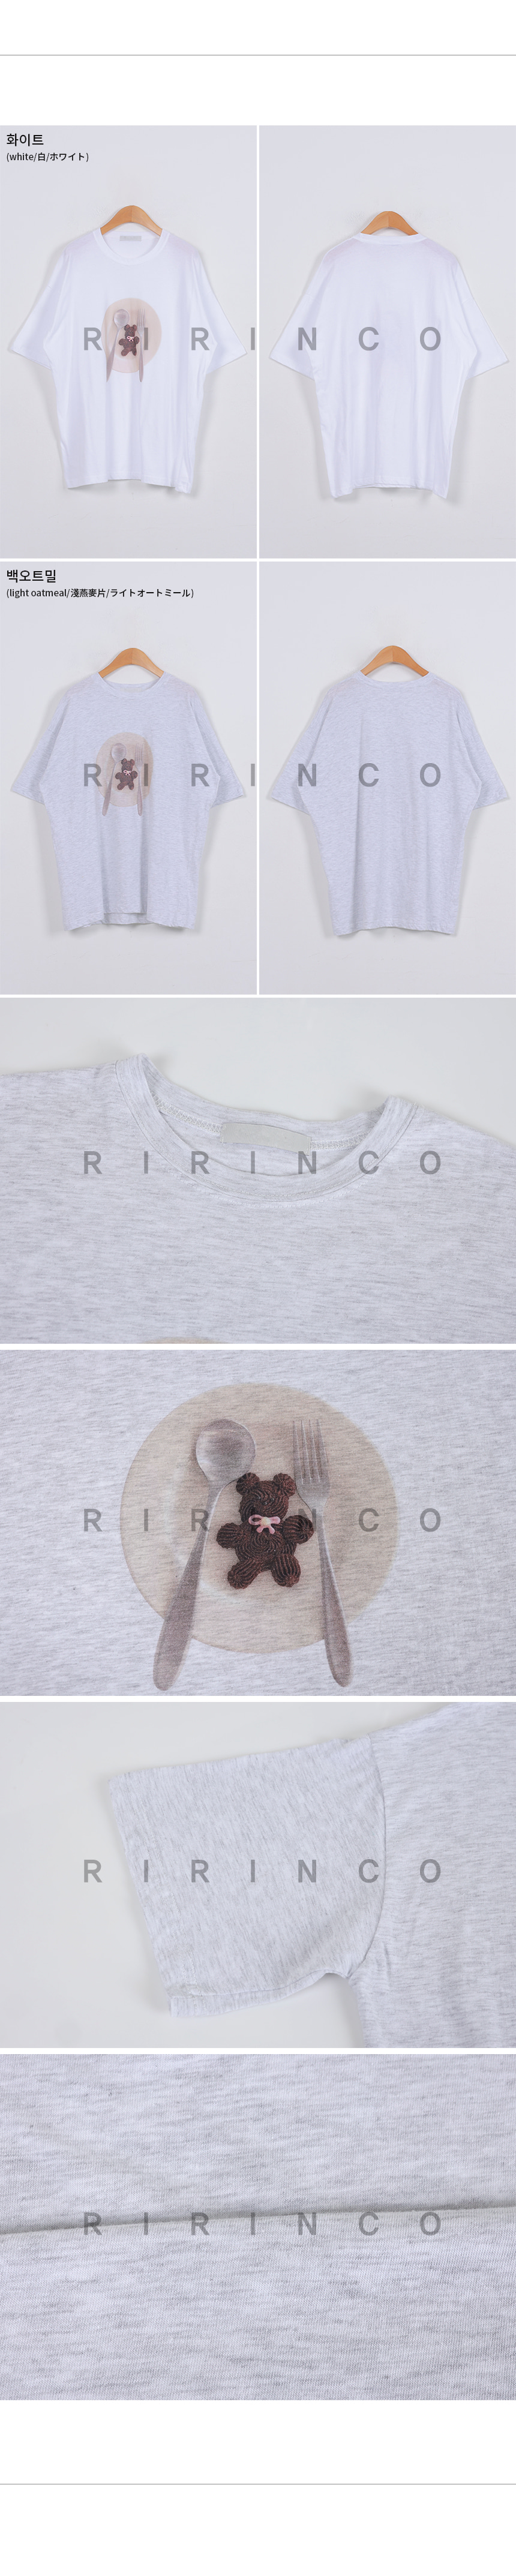 RIRINCO フロントプリントルーズフィット半袖Tシャツ